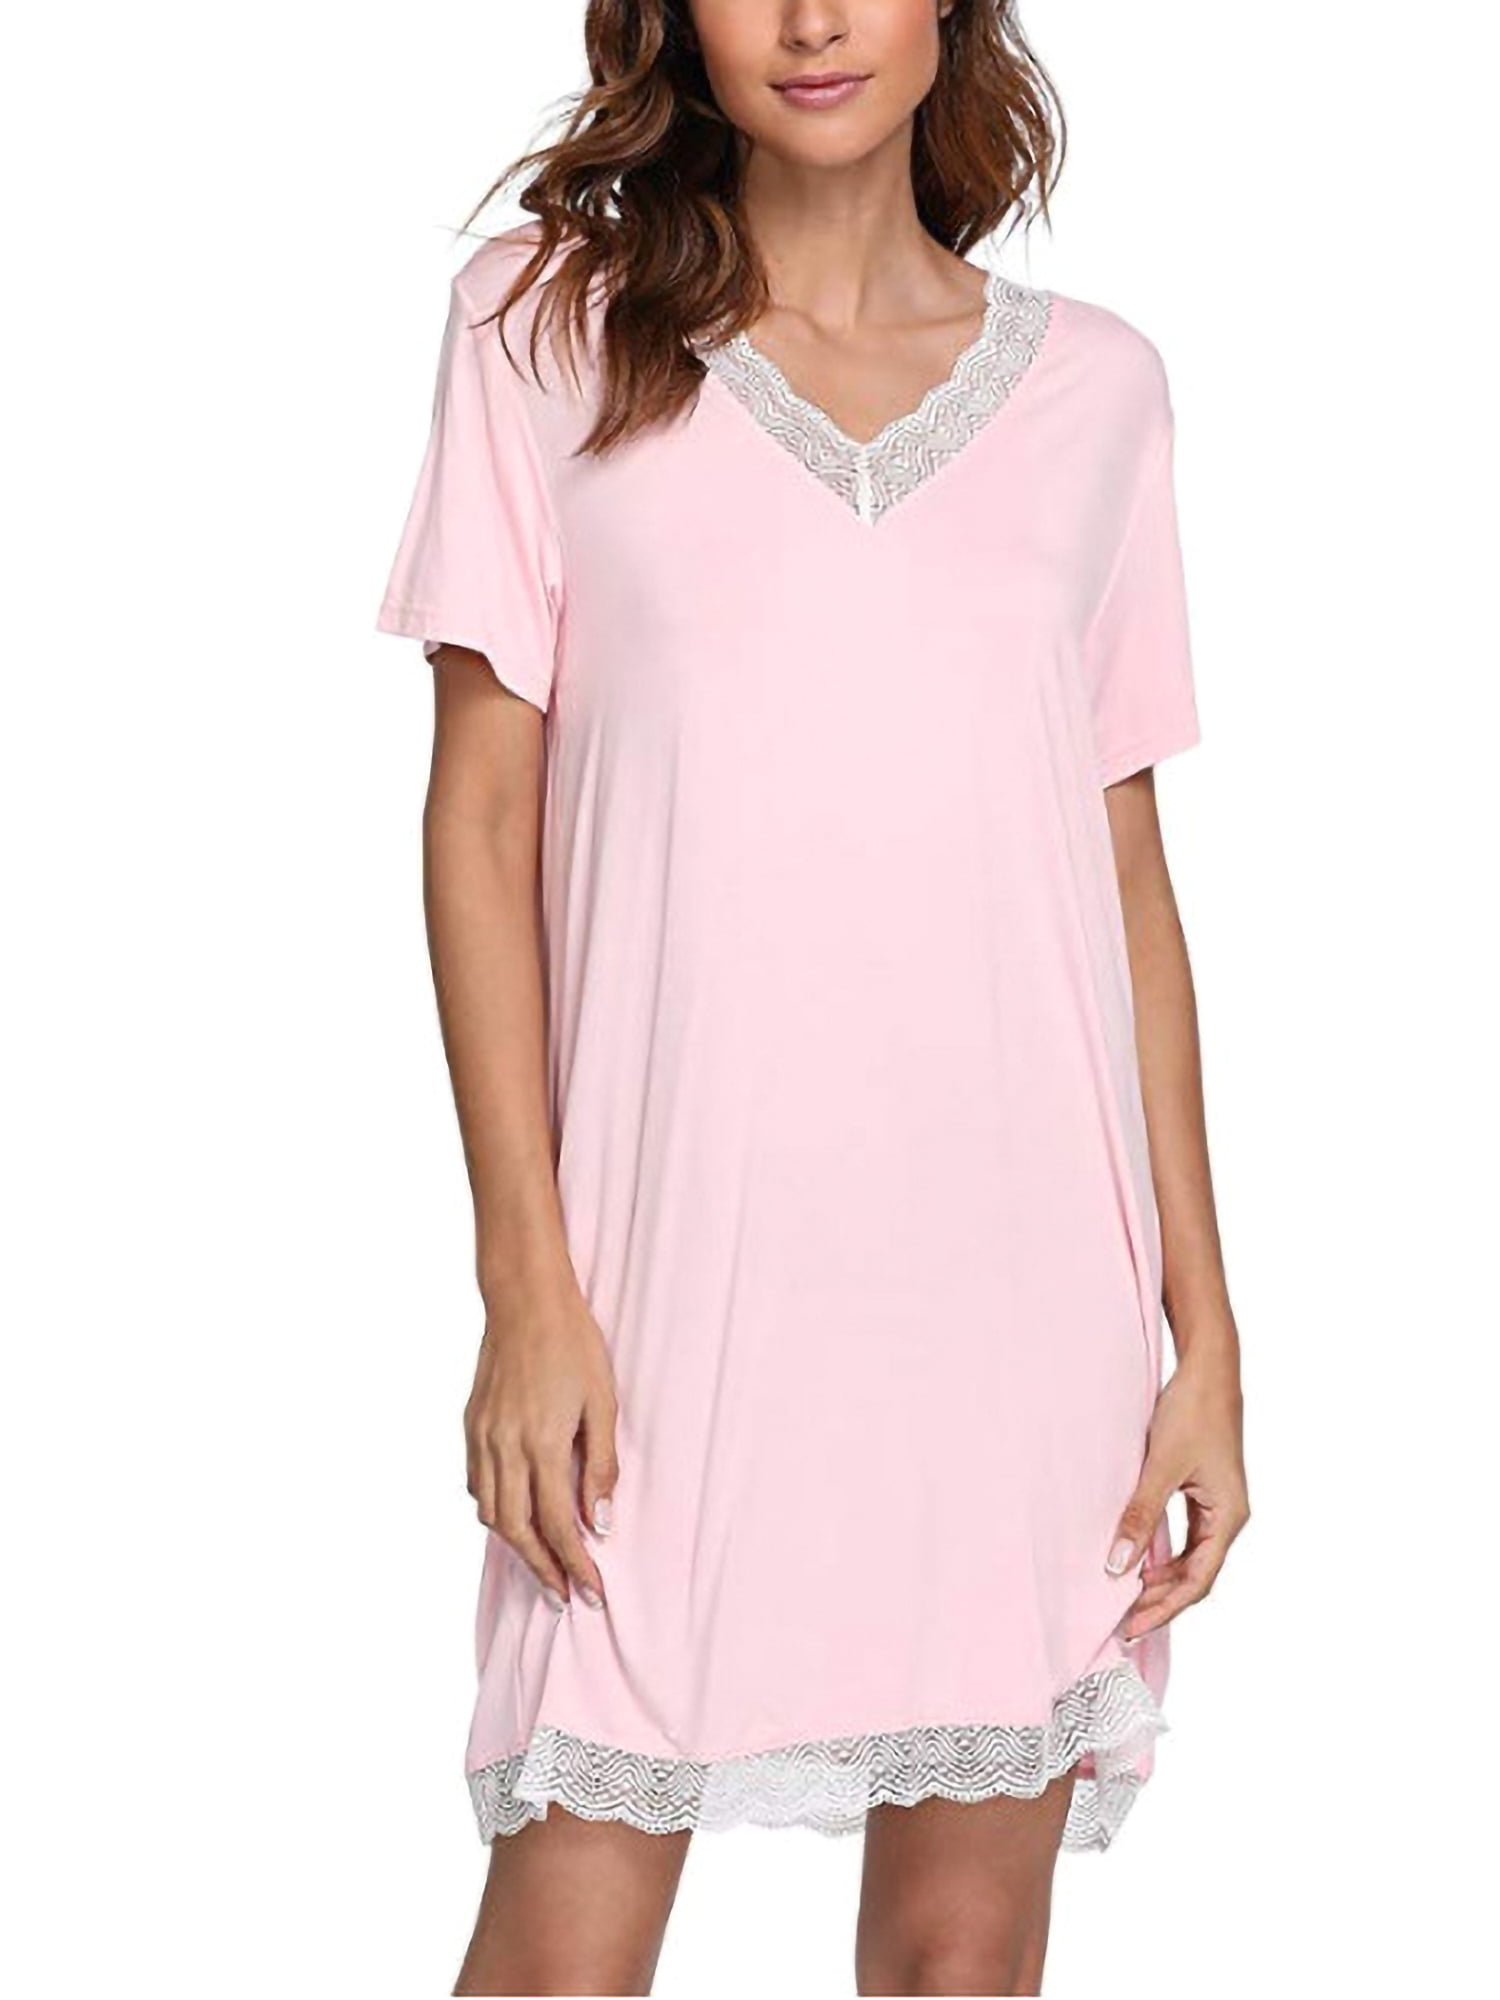 New Ladies Novelty Kaftan Nightie Womens Pyjama Dress Top T-shirt Size S XL